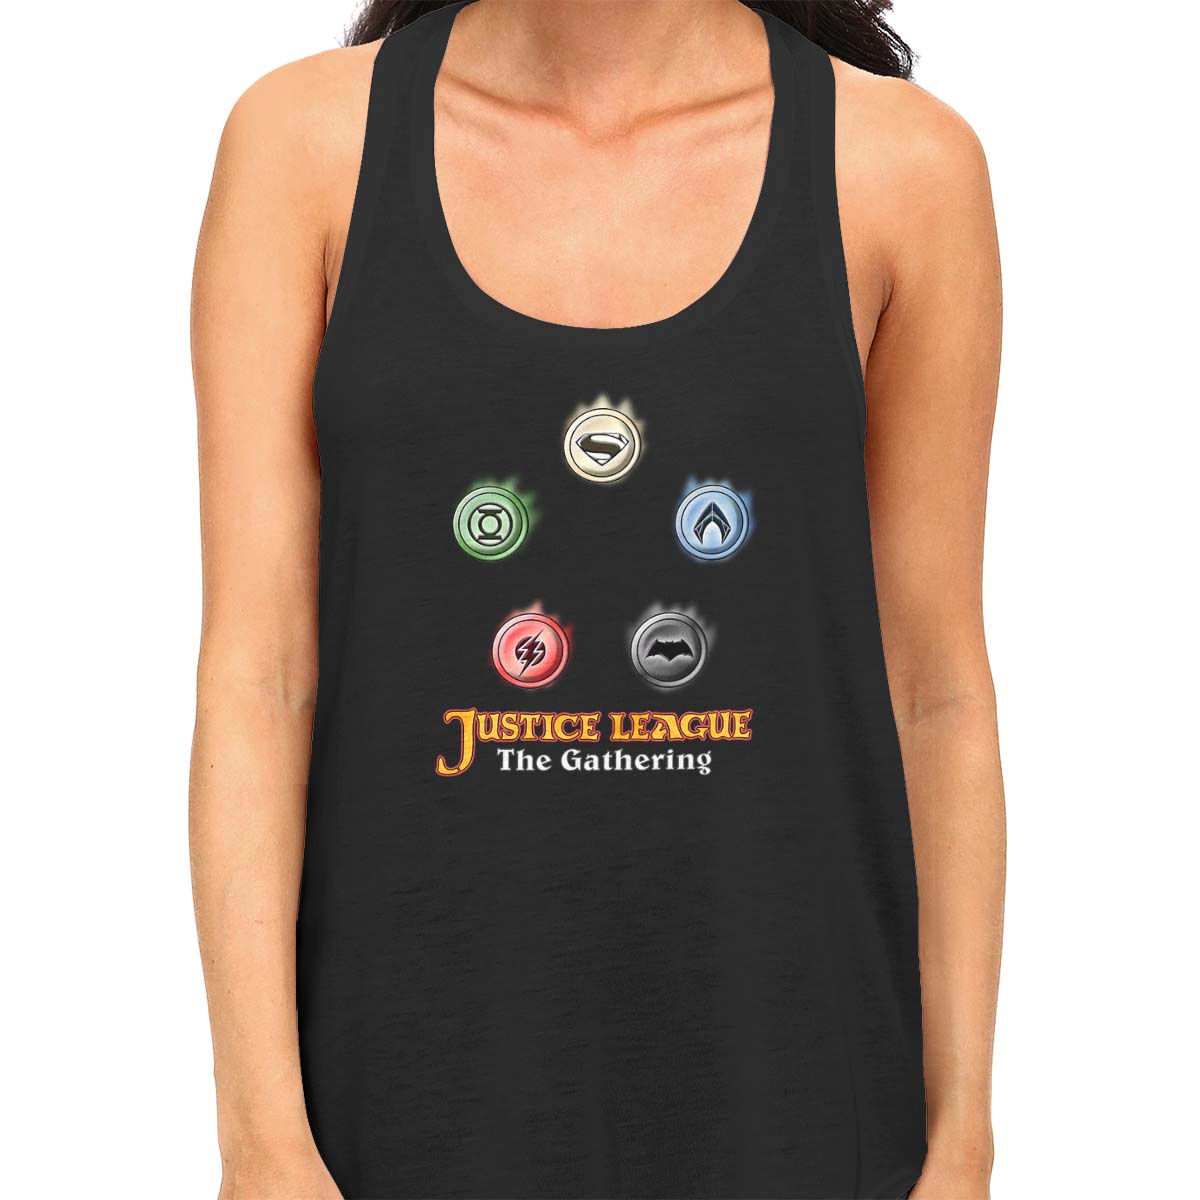 Justice League The Gathering Women's Racerback Tank